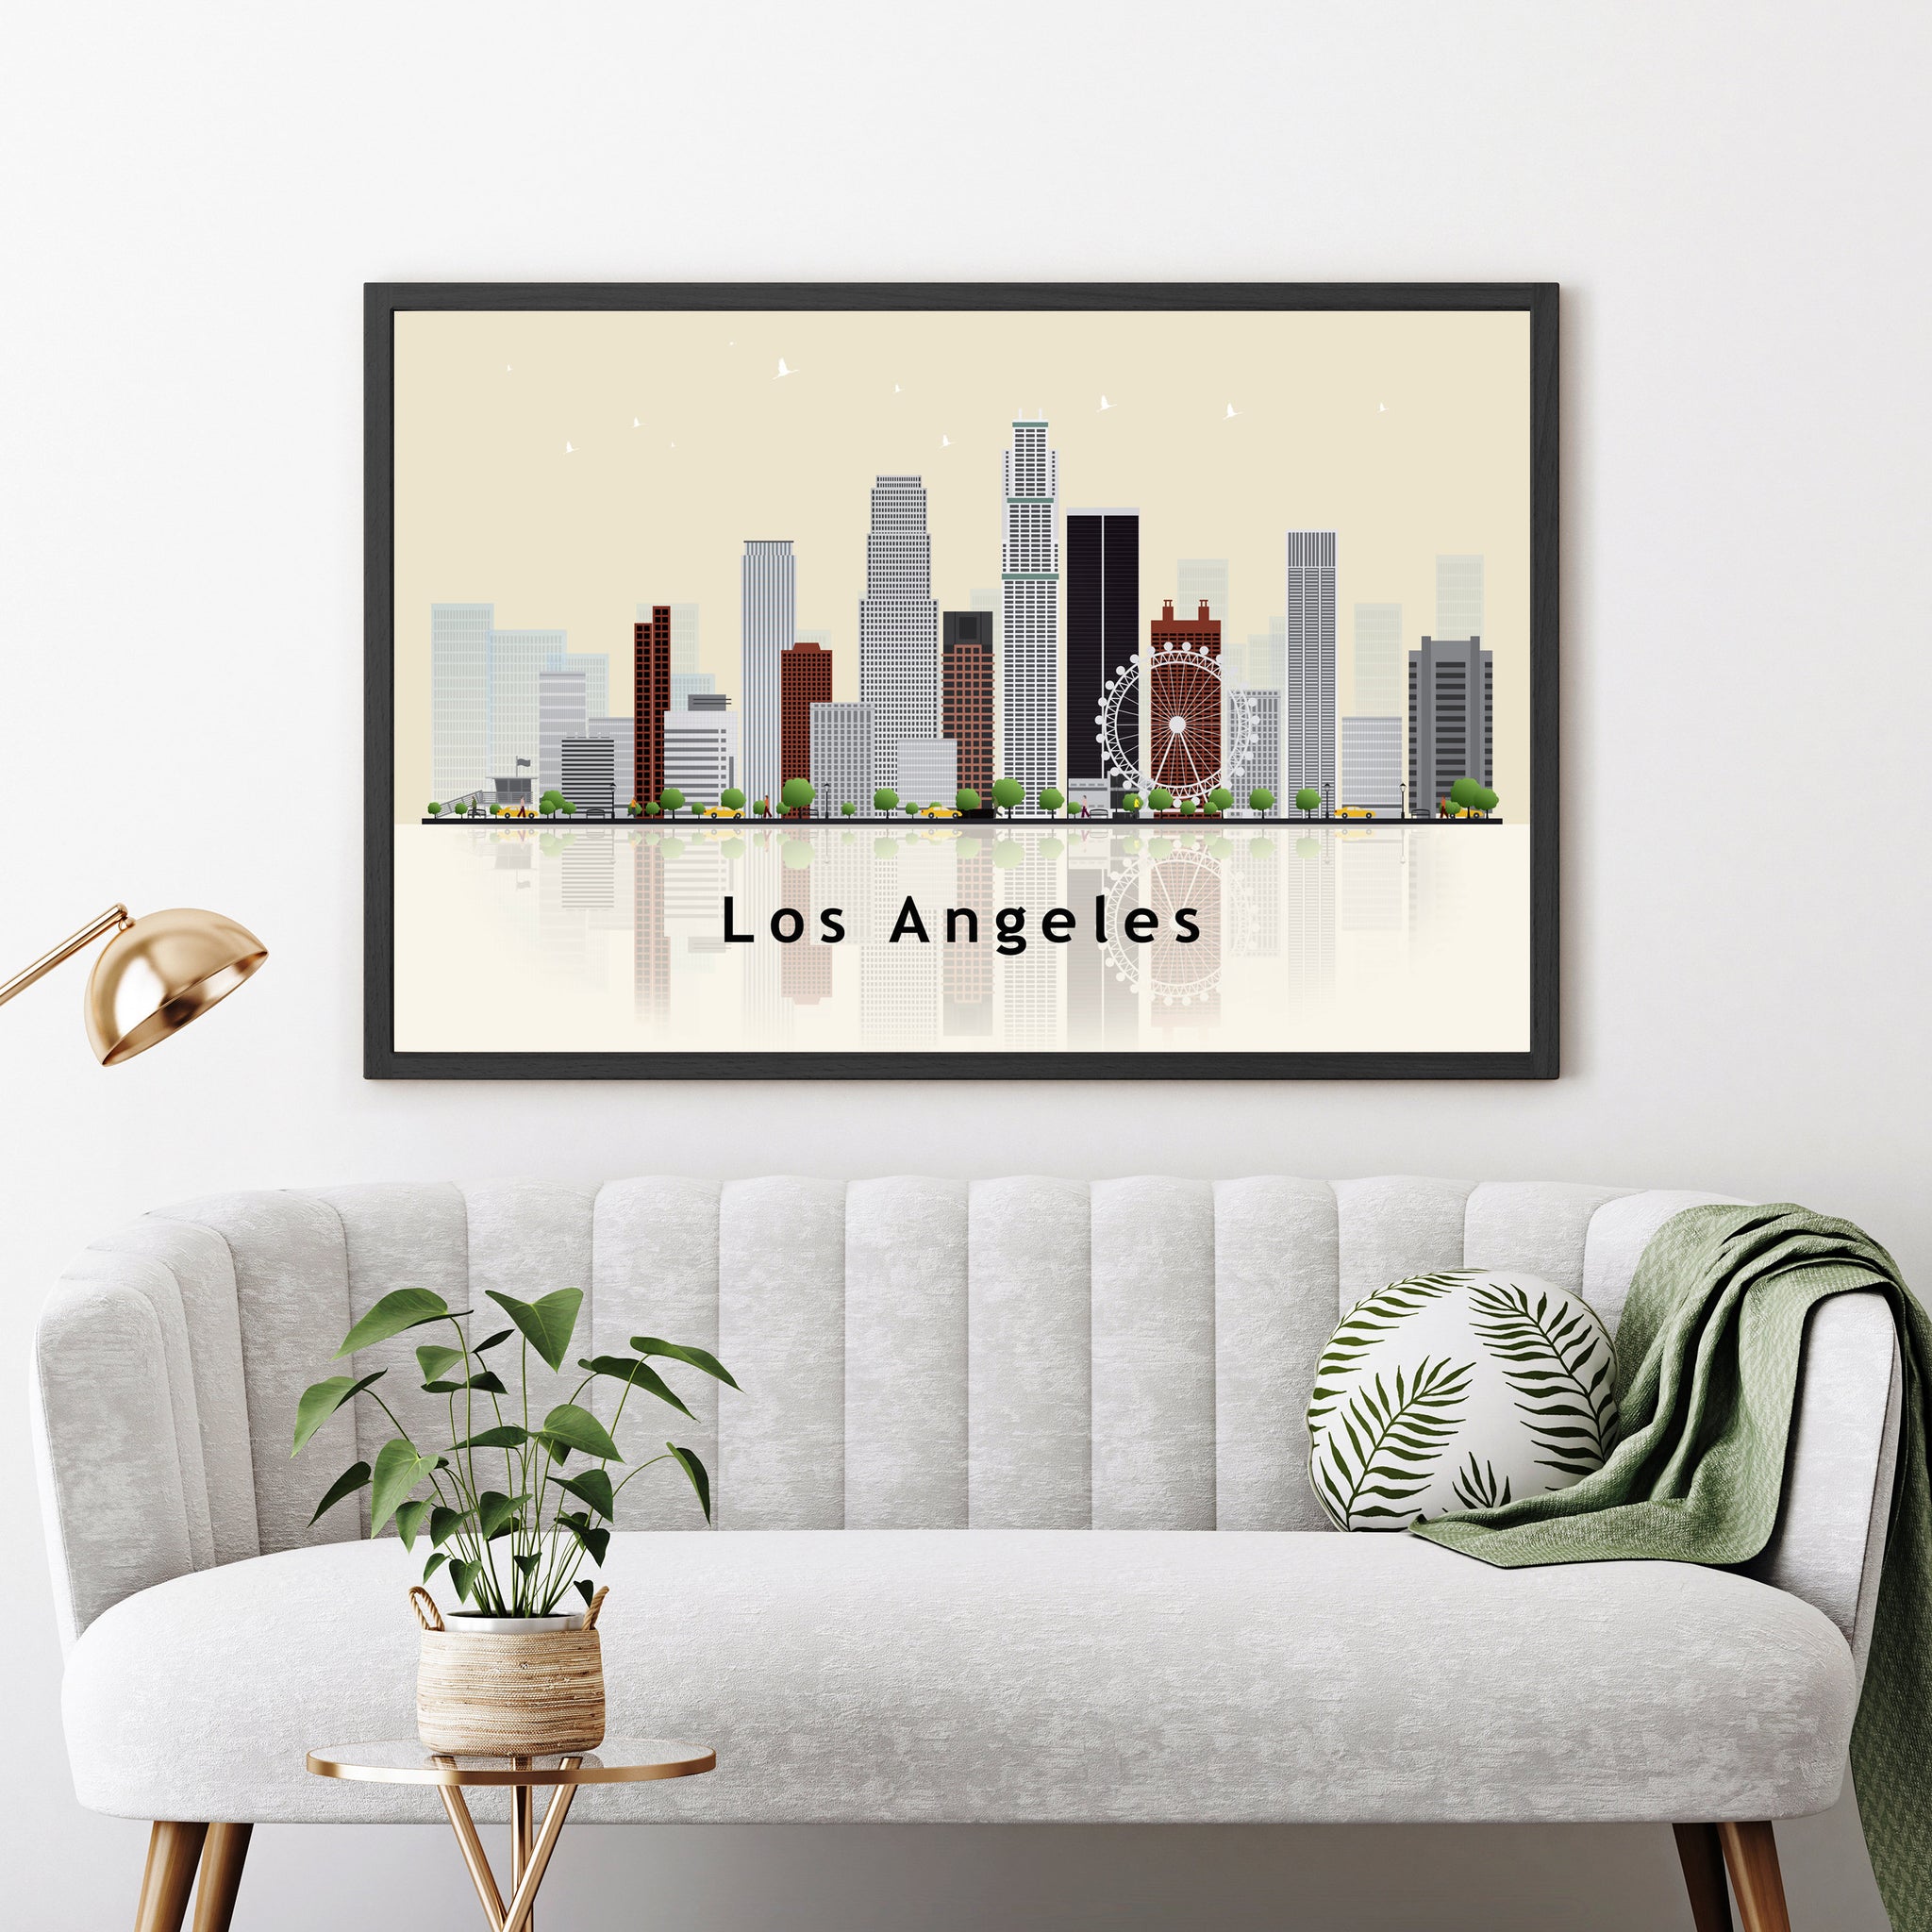 LOS ANGELES CALIFORNIA Illustration skyline poster, California state modern skyline cityscape poster, Landmark poster, Home wall decoration